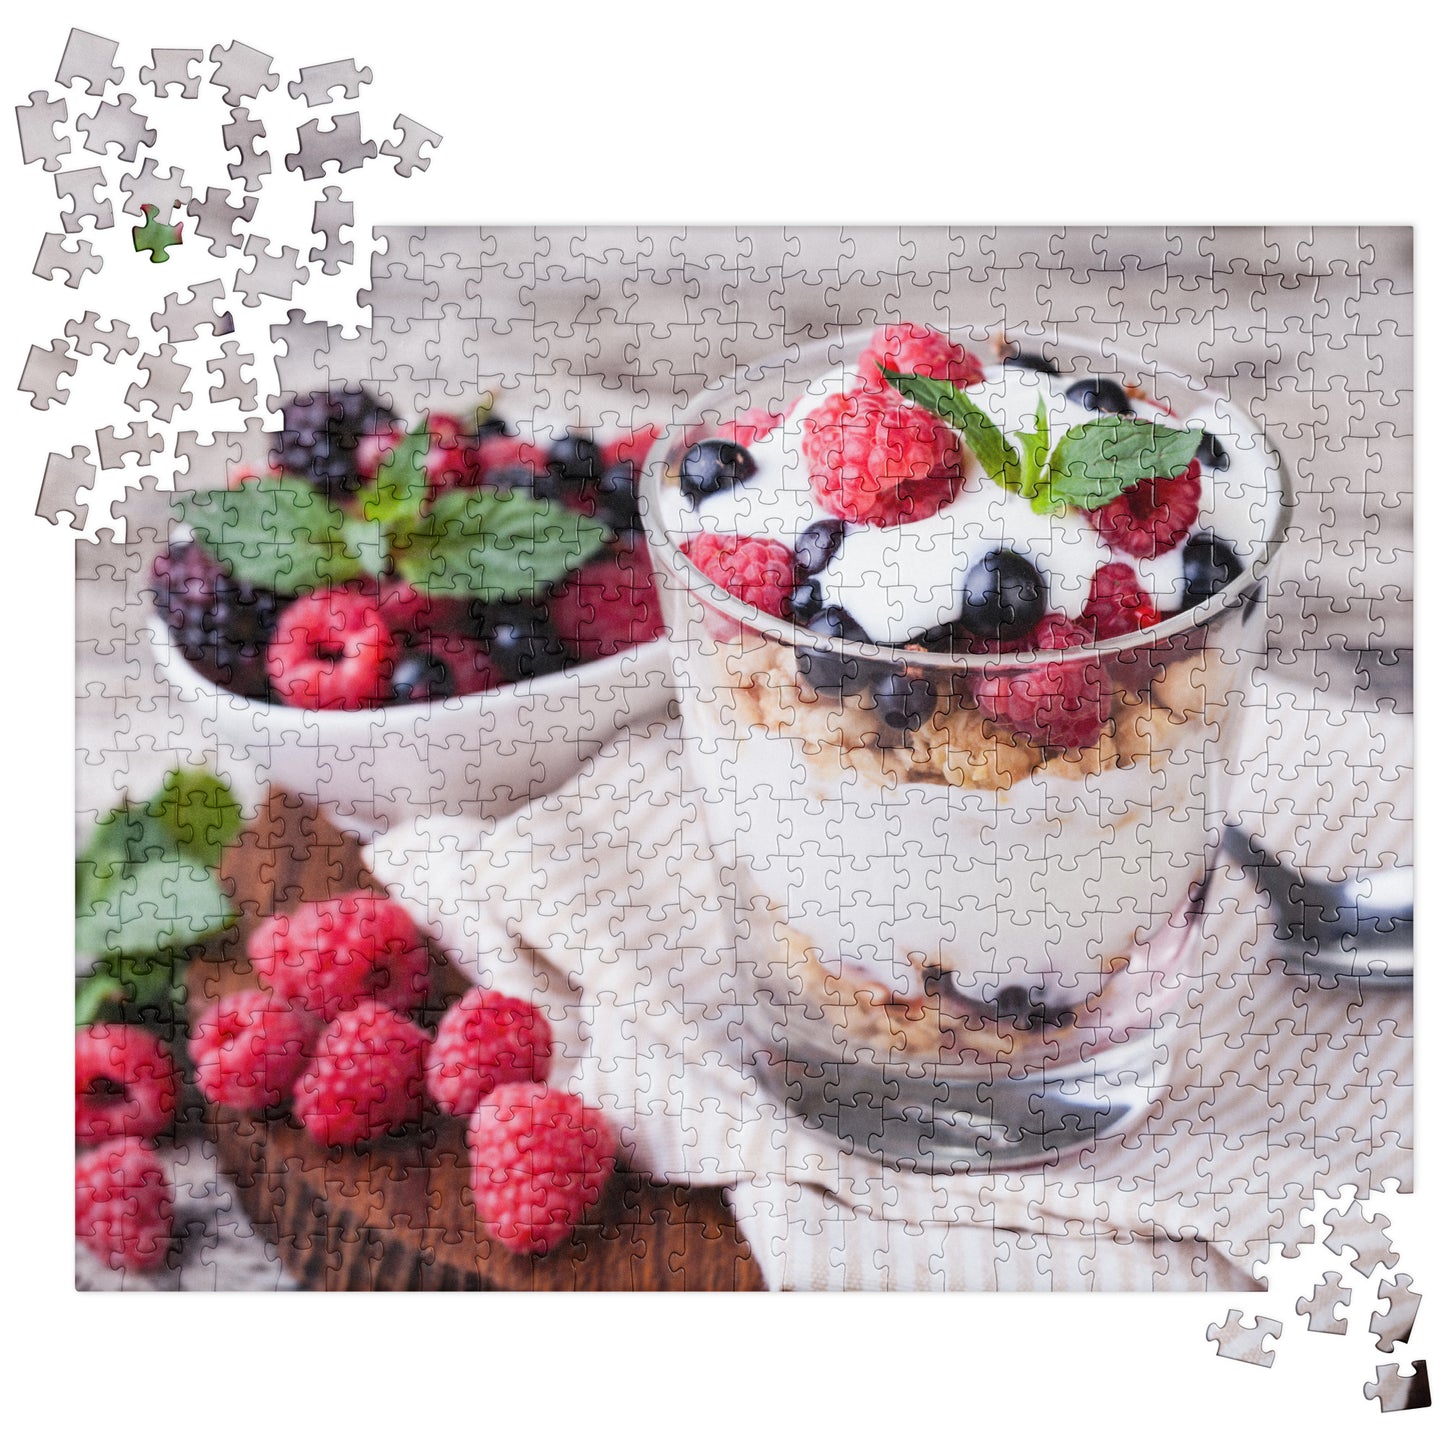 Food Fare Jigsaw puzzle: Yogurt with Muesli & Fruit